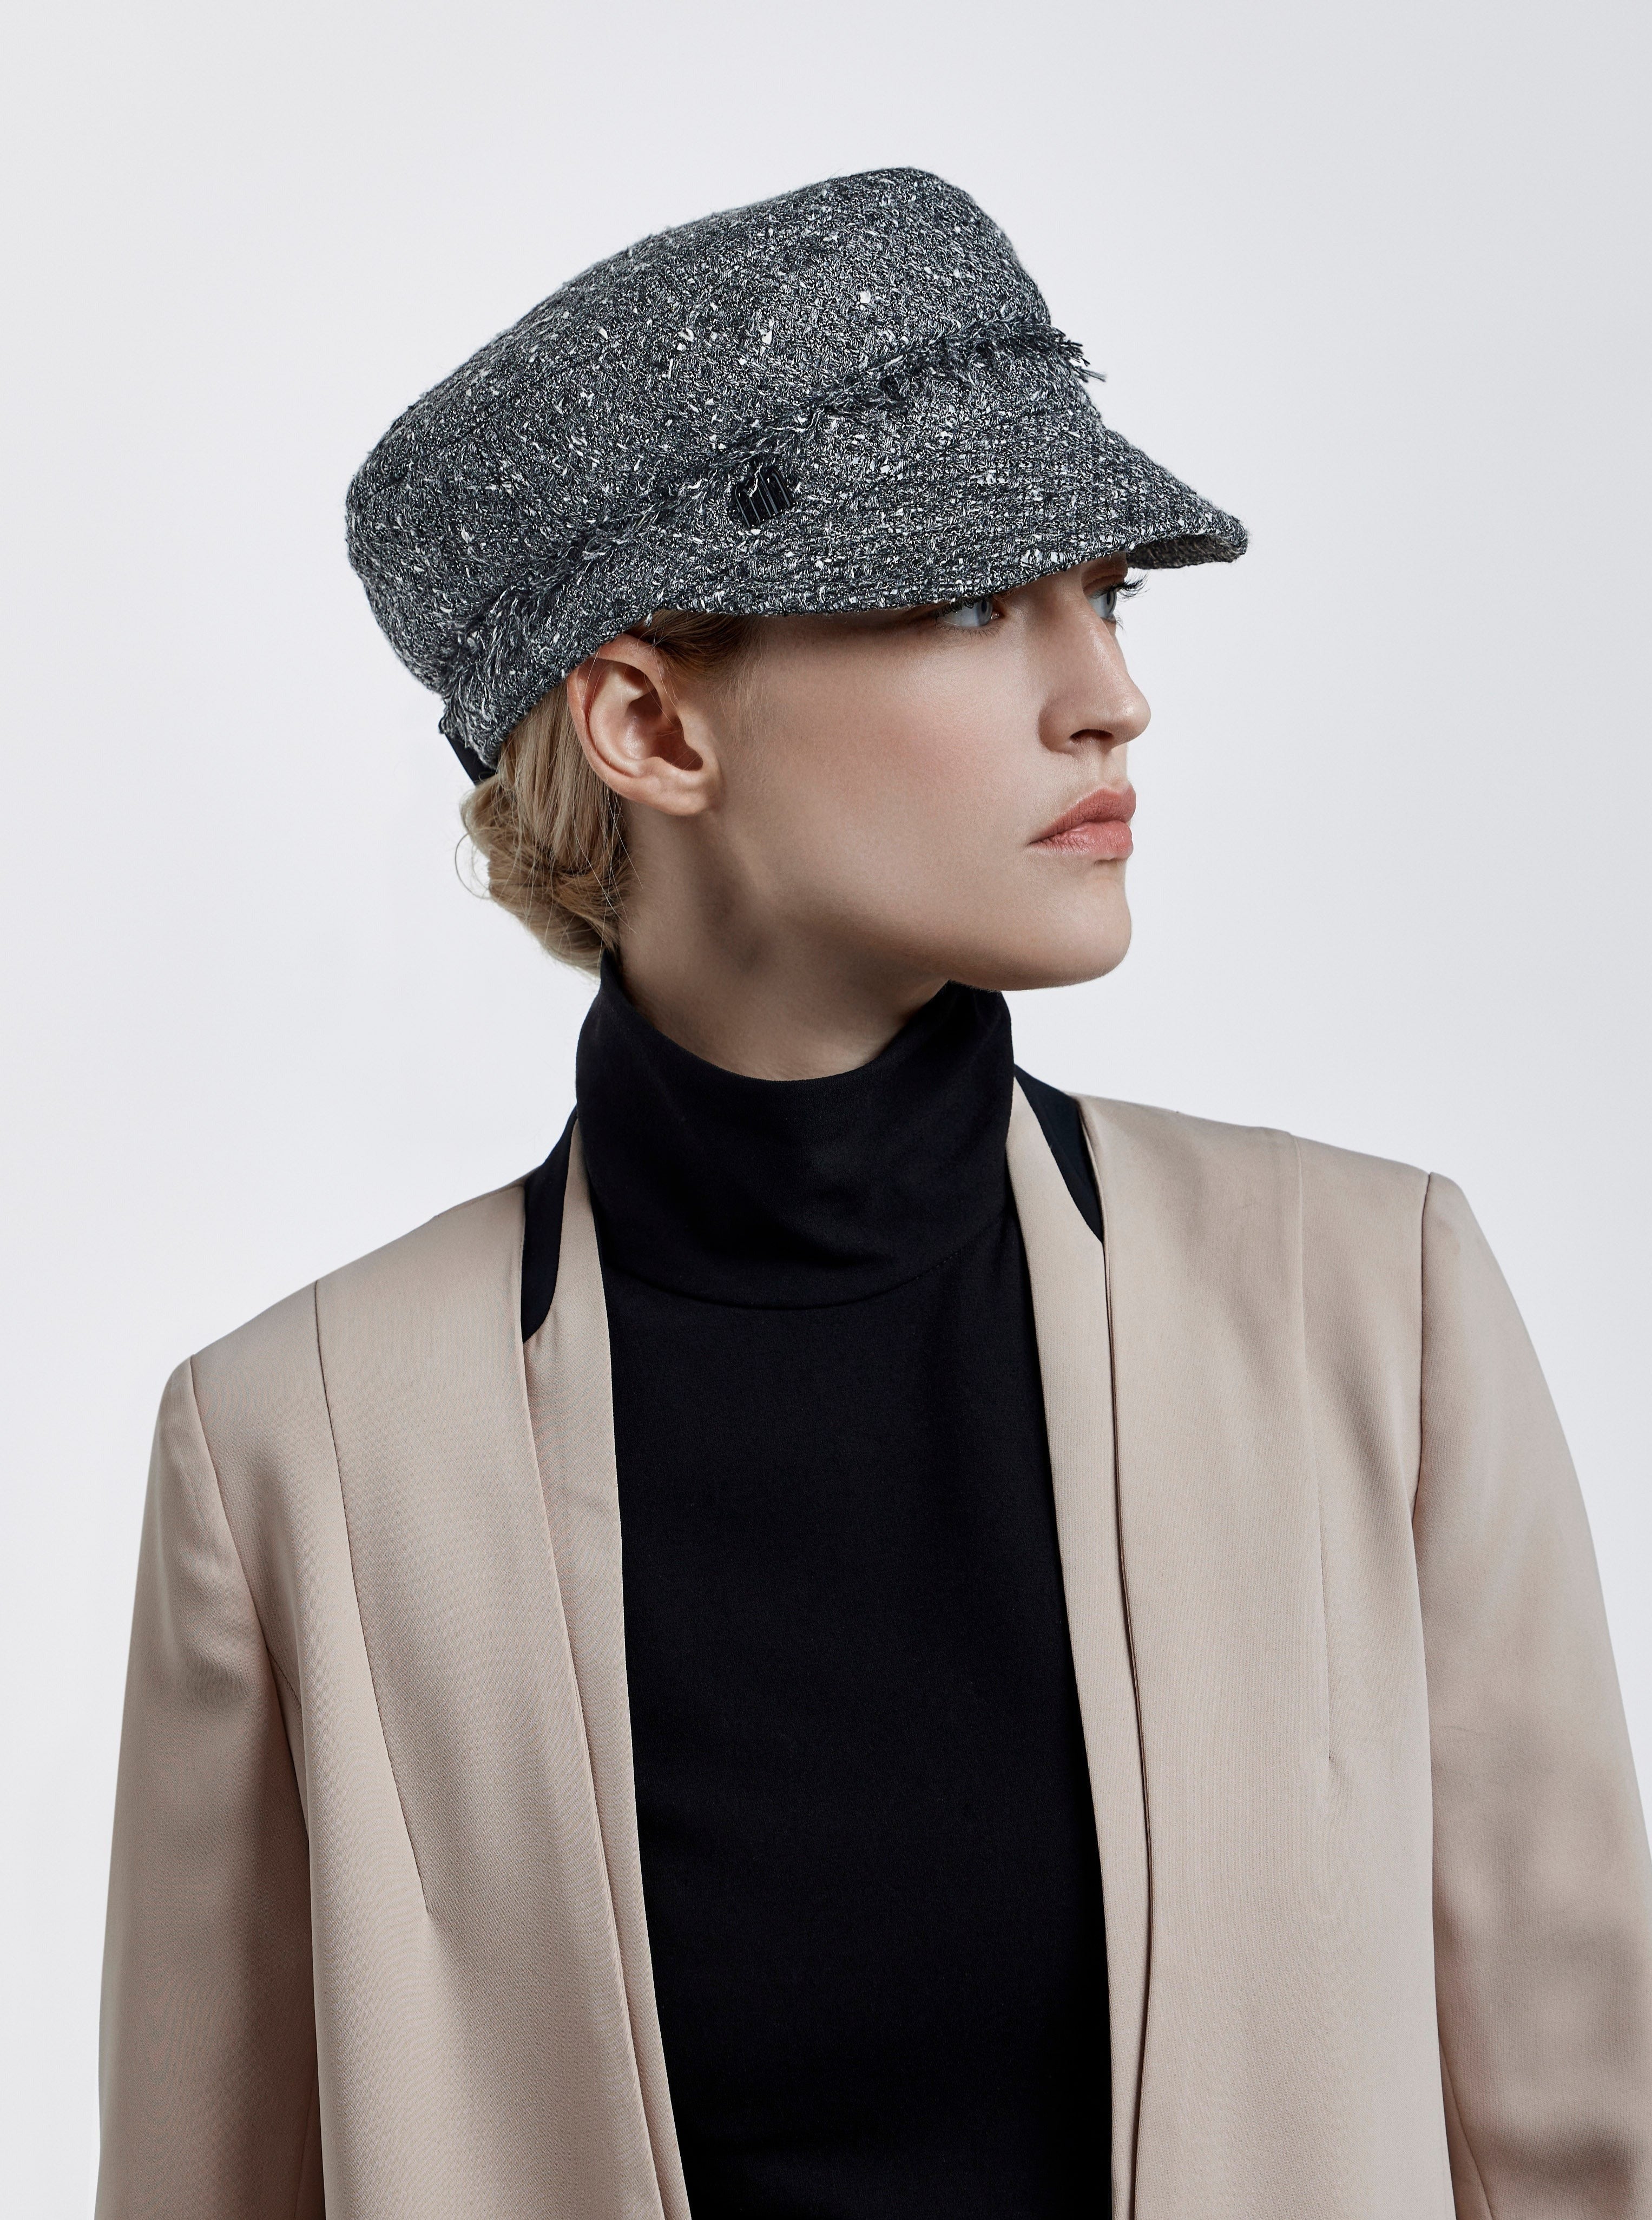 Misa Harada Hats | ALEX | Grey tweed Marine cap with recycled cashmere peak